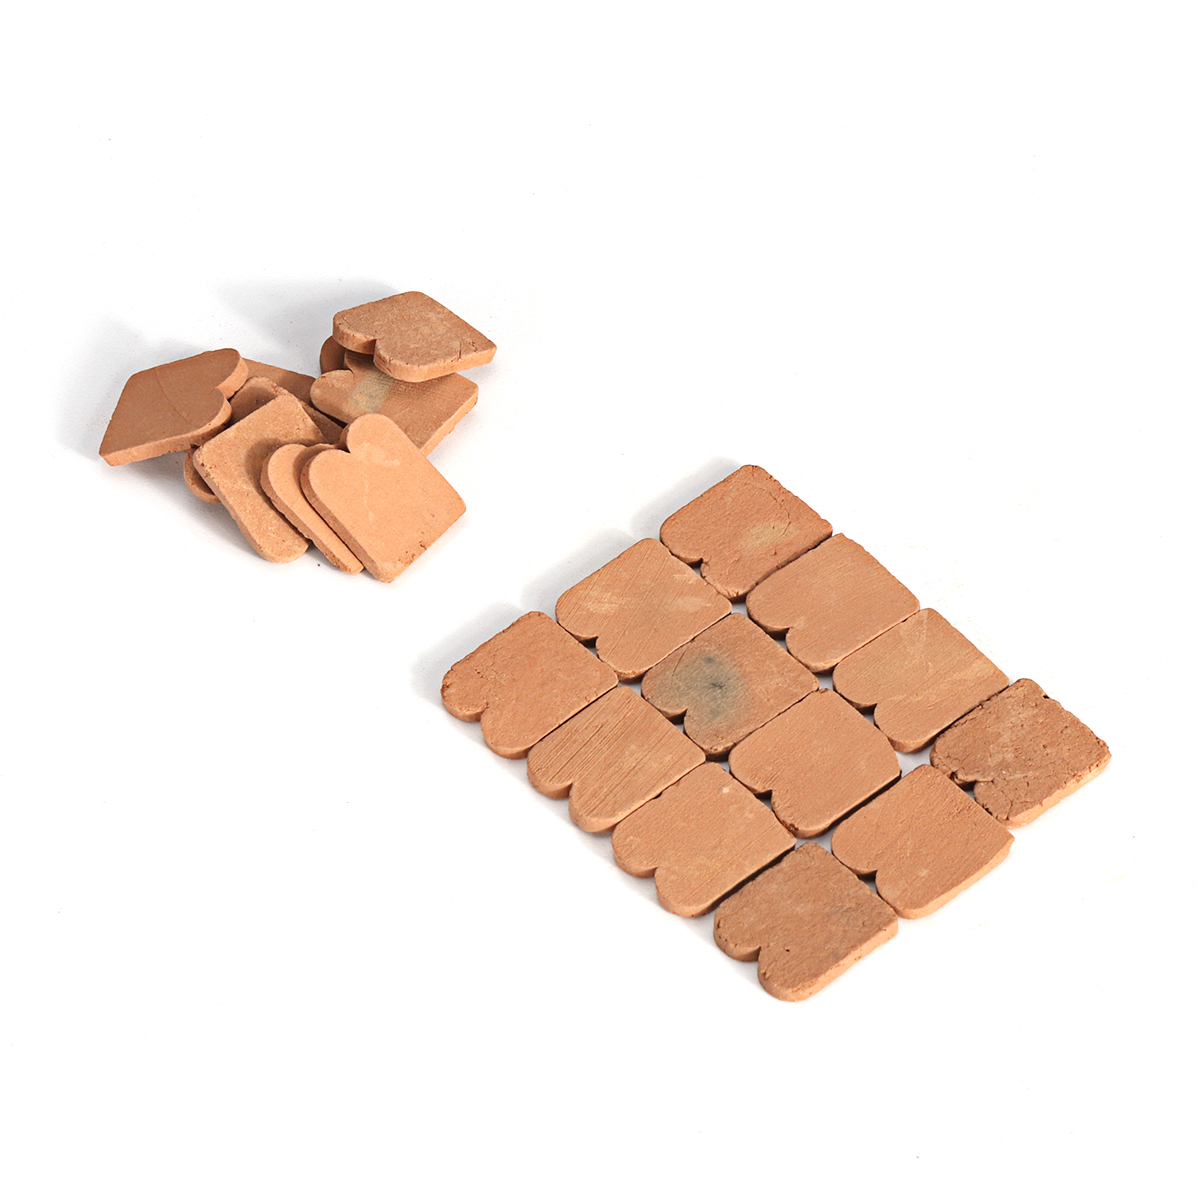 Miniature-Simulation-Model-Brick-Tiles-DIY-Handmade-Sand-Table-Building-Landscape-Decoration-Tool-1559359-7